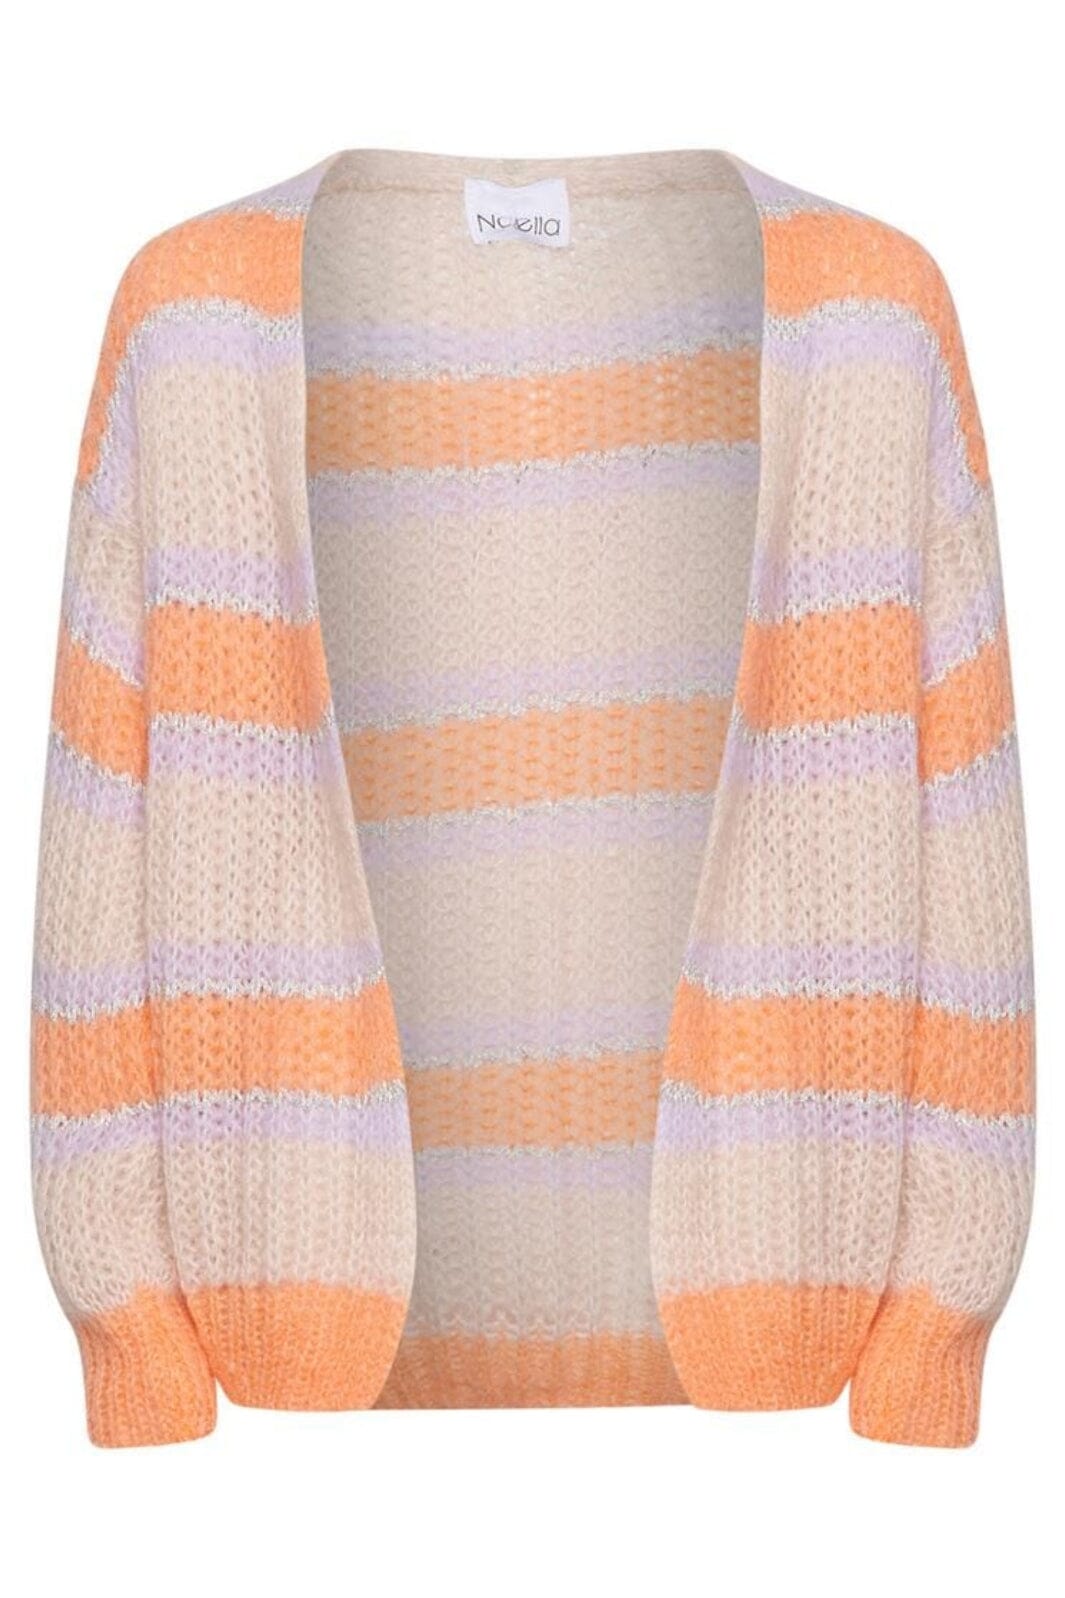 Noella - Pacific Knit Cardigan - Apricot/Lavender Mix Cardigans 